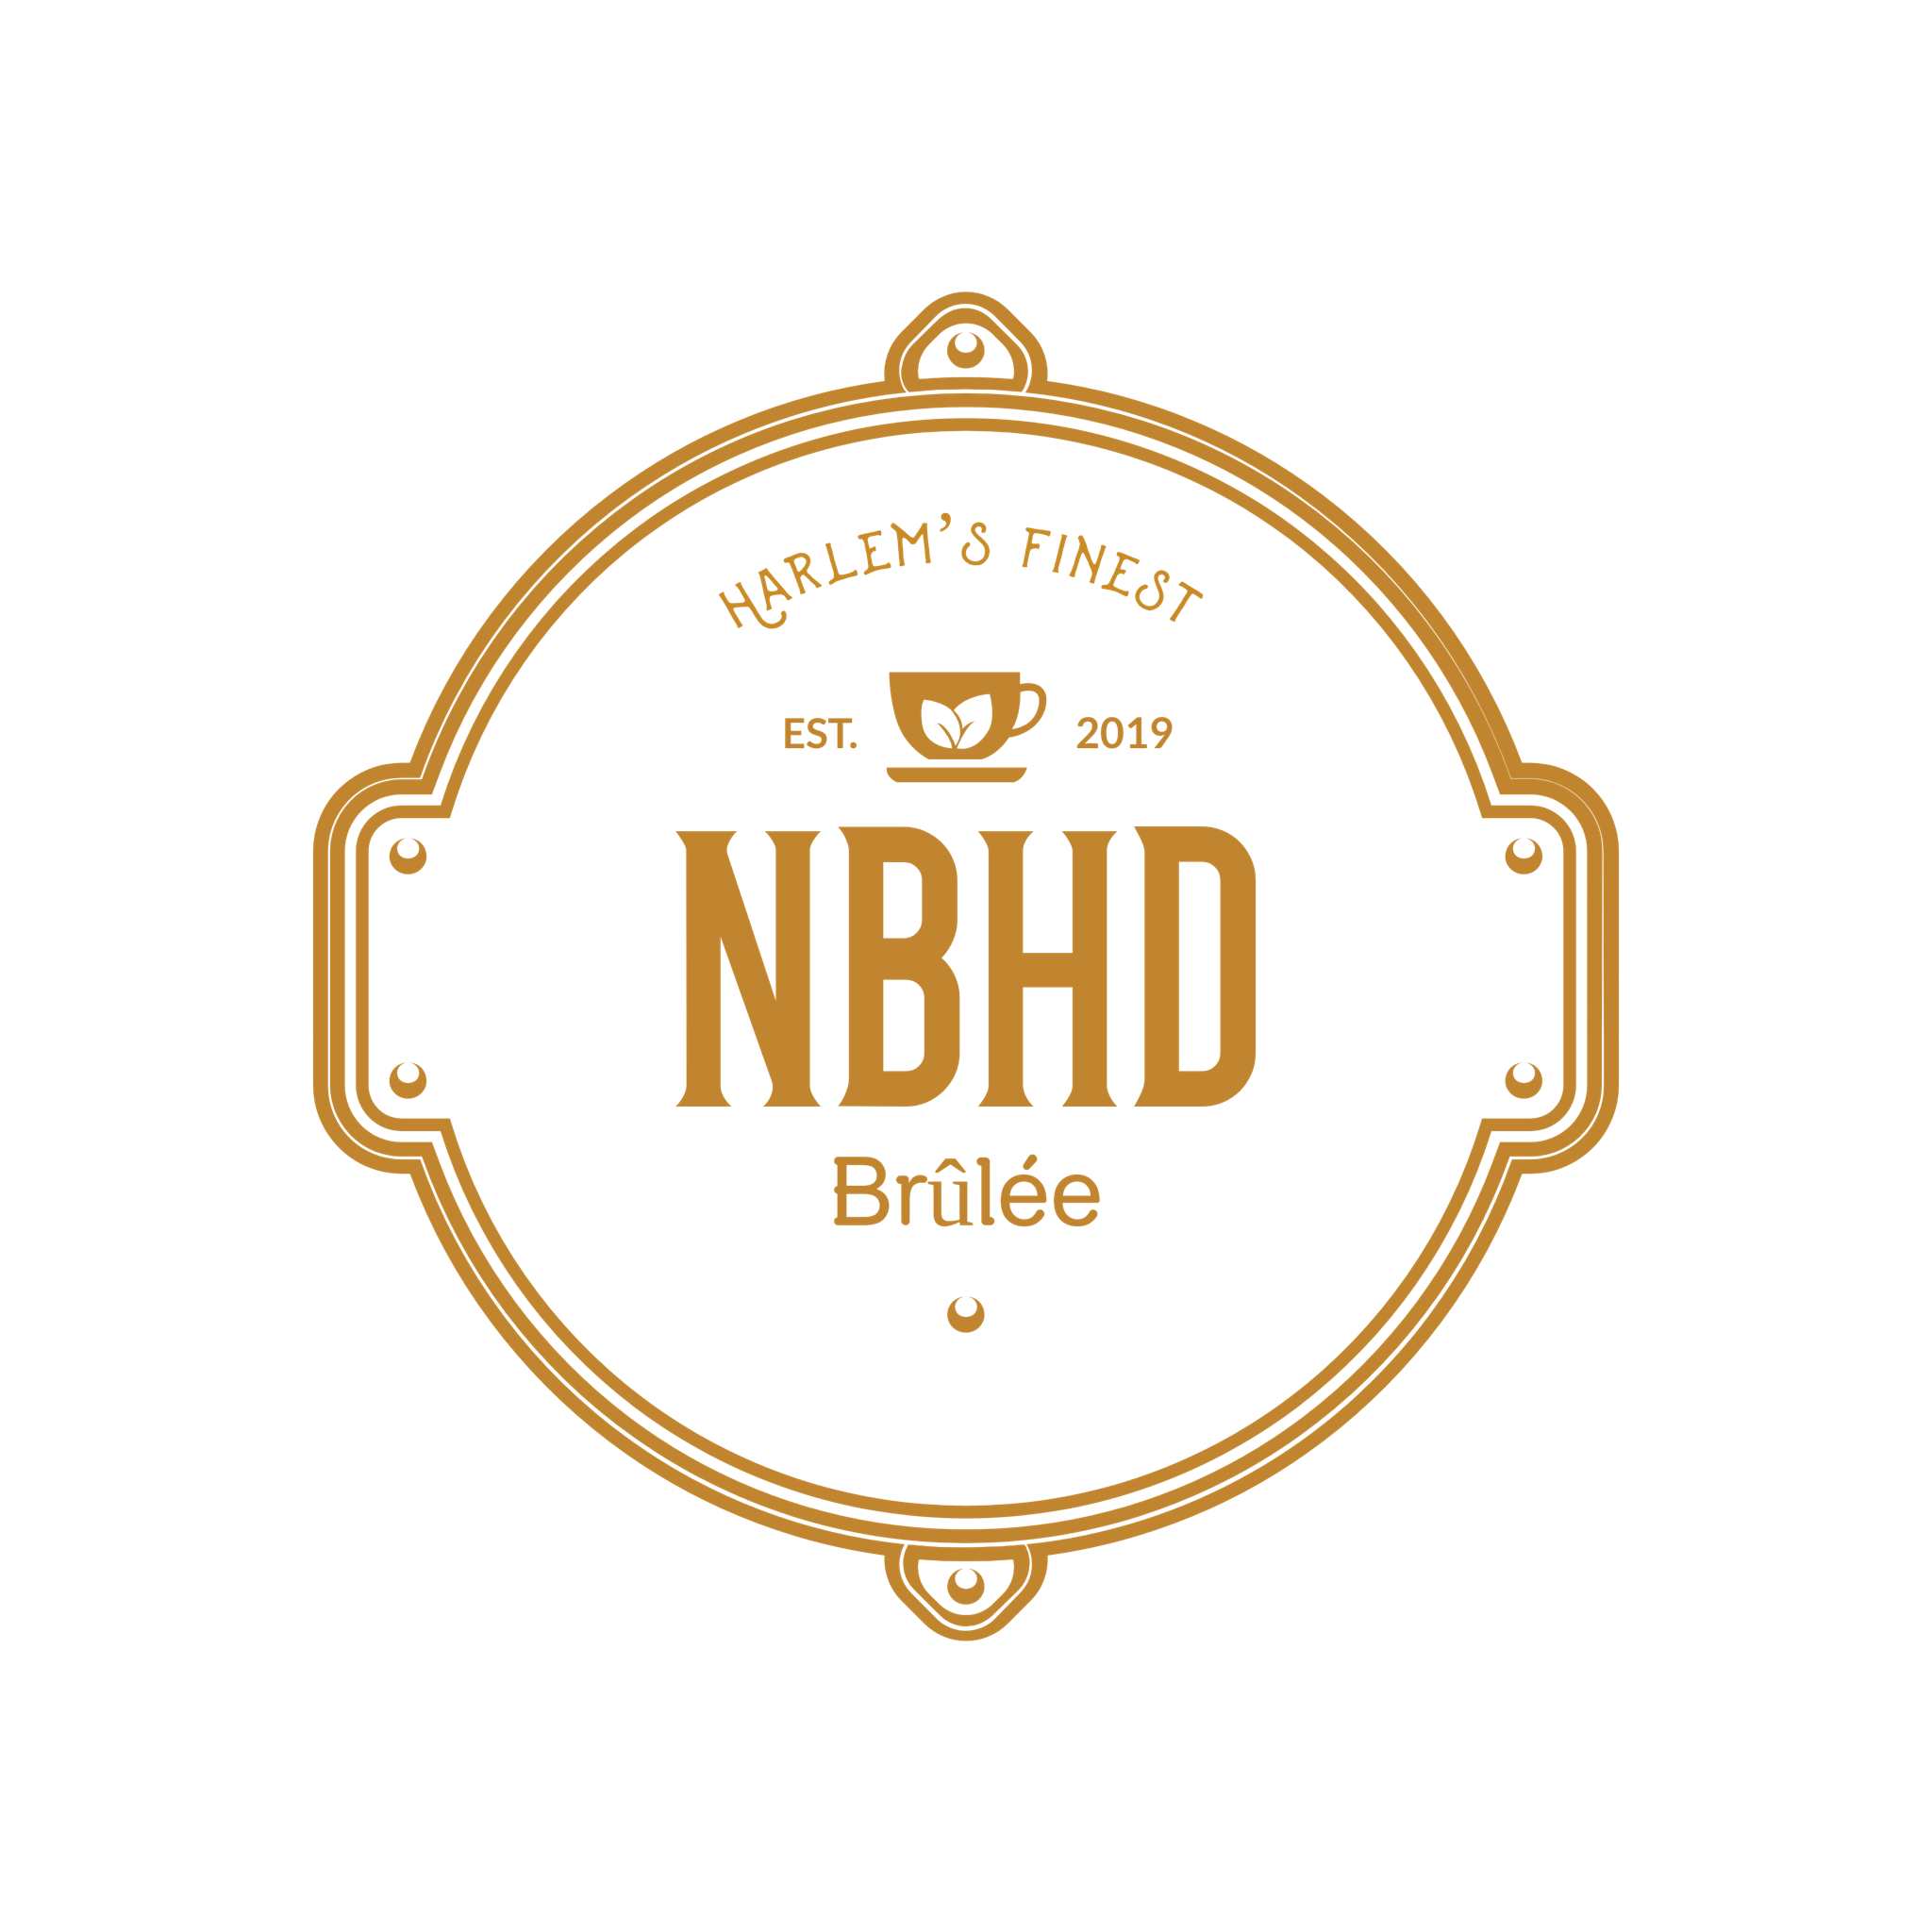 NBHD Brûlée - Harlem's Finest